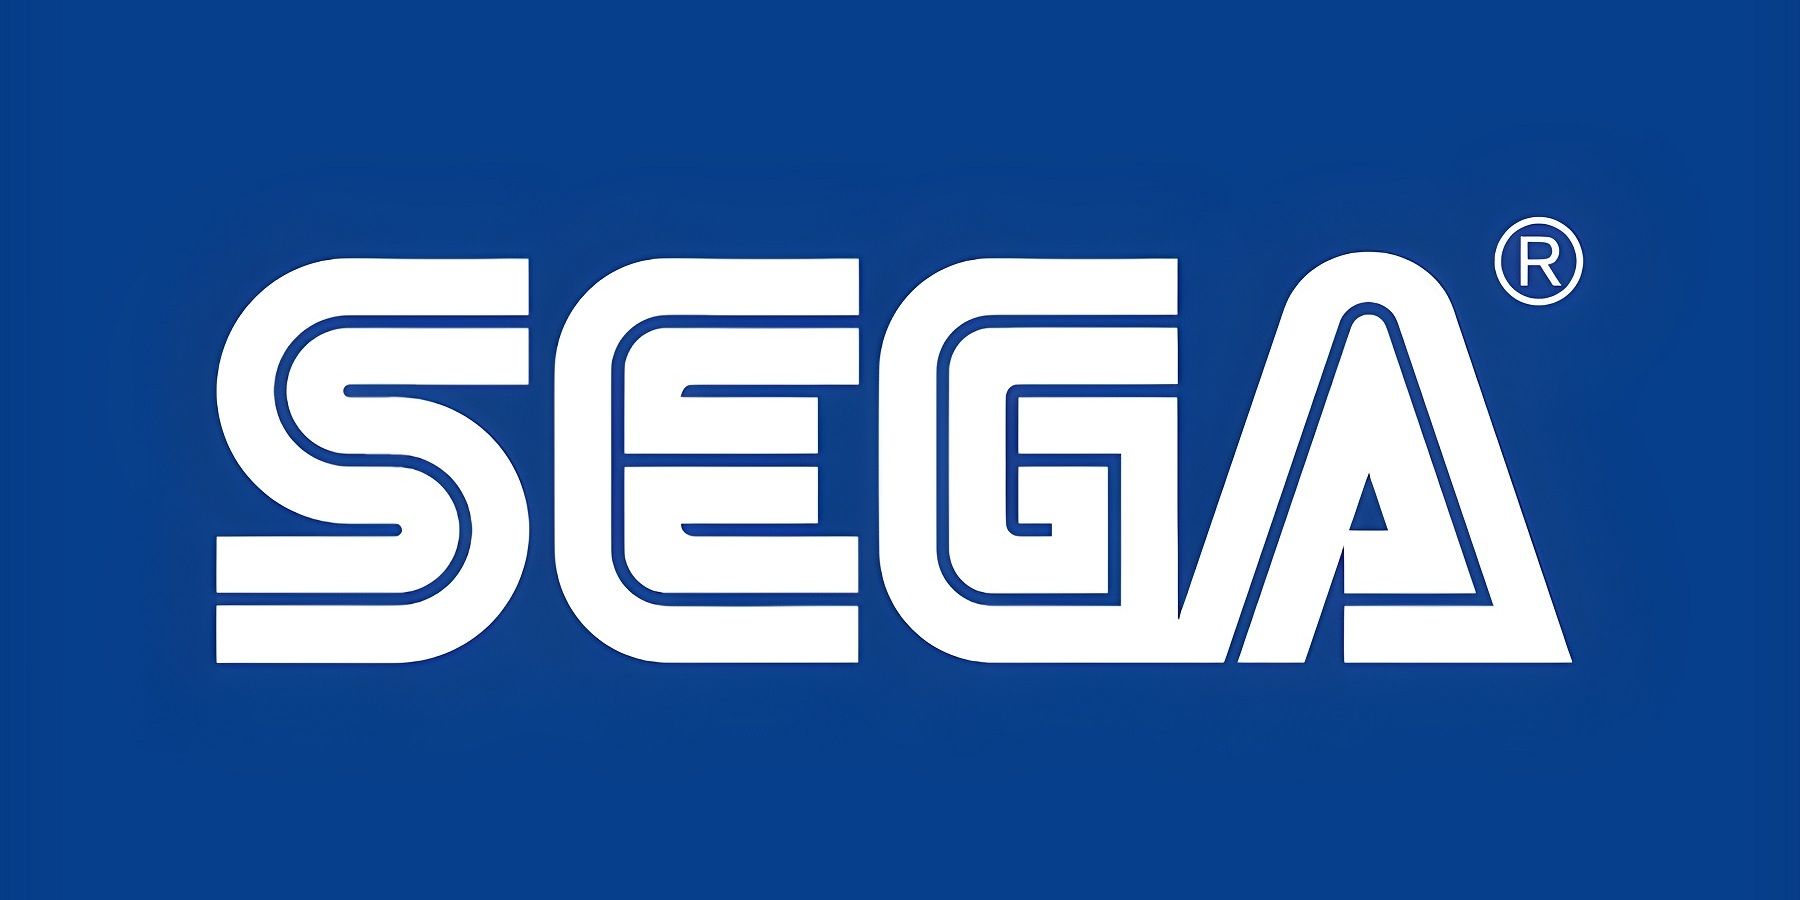 Sega-official-logo-blue-background